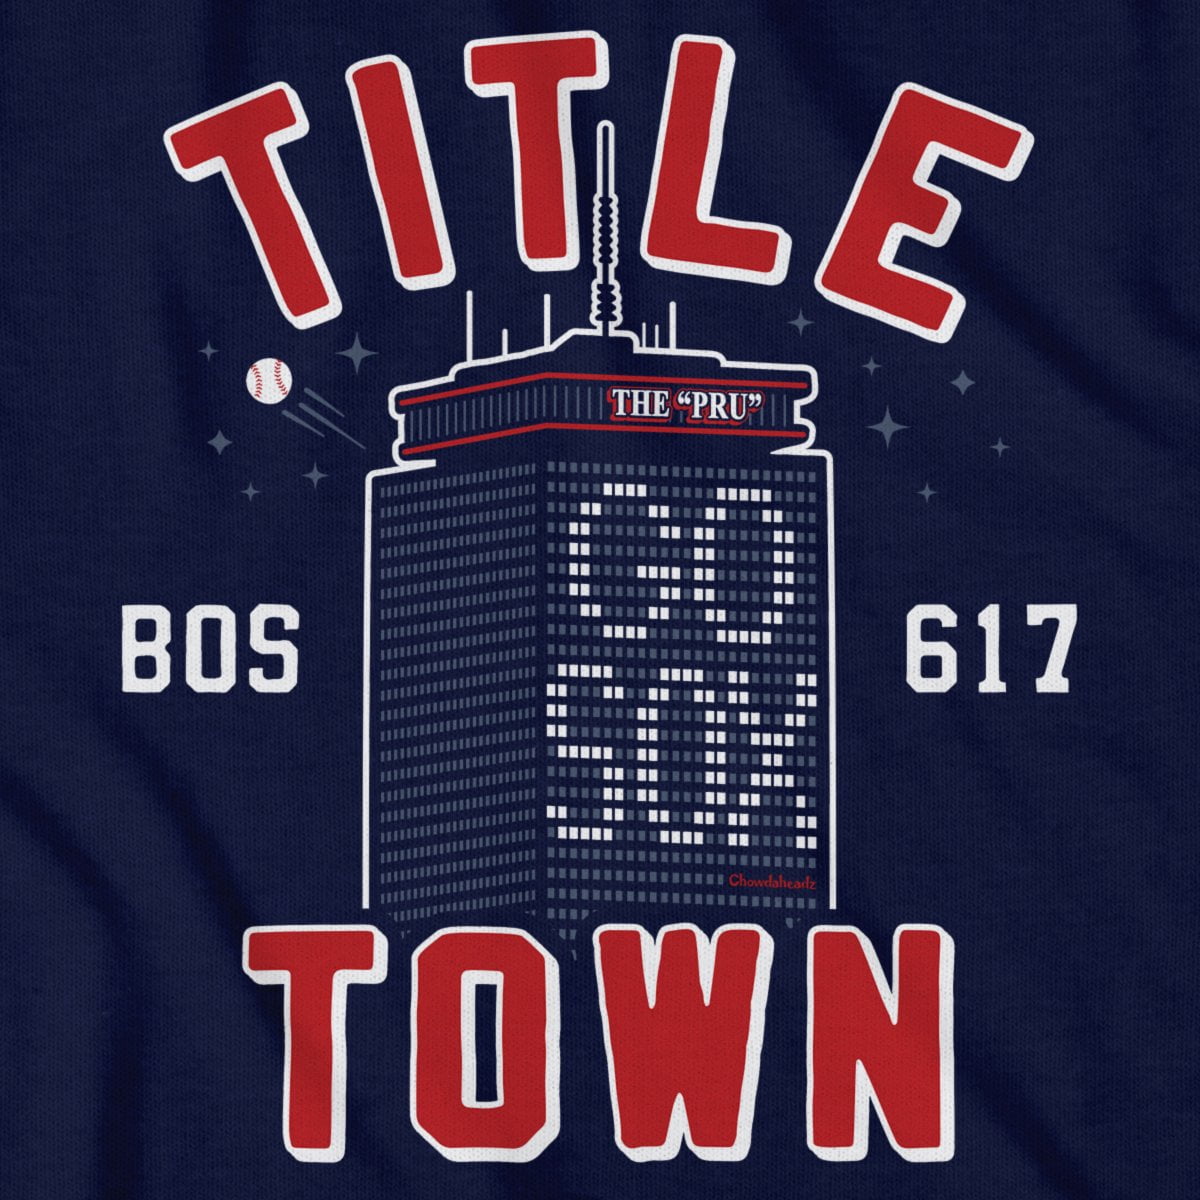 Title Town Boston Baseball T-Shirt - Chowdaheadz